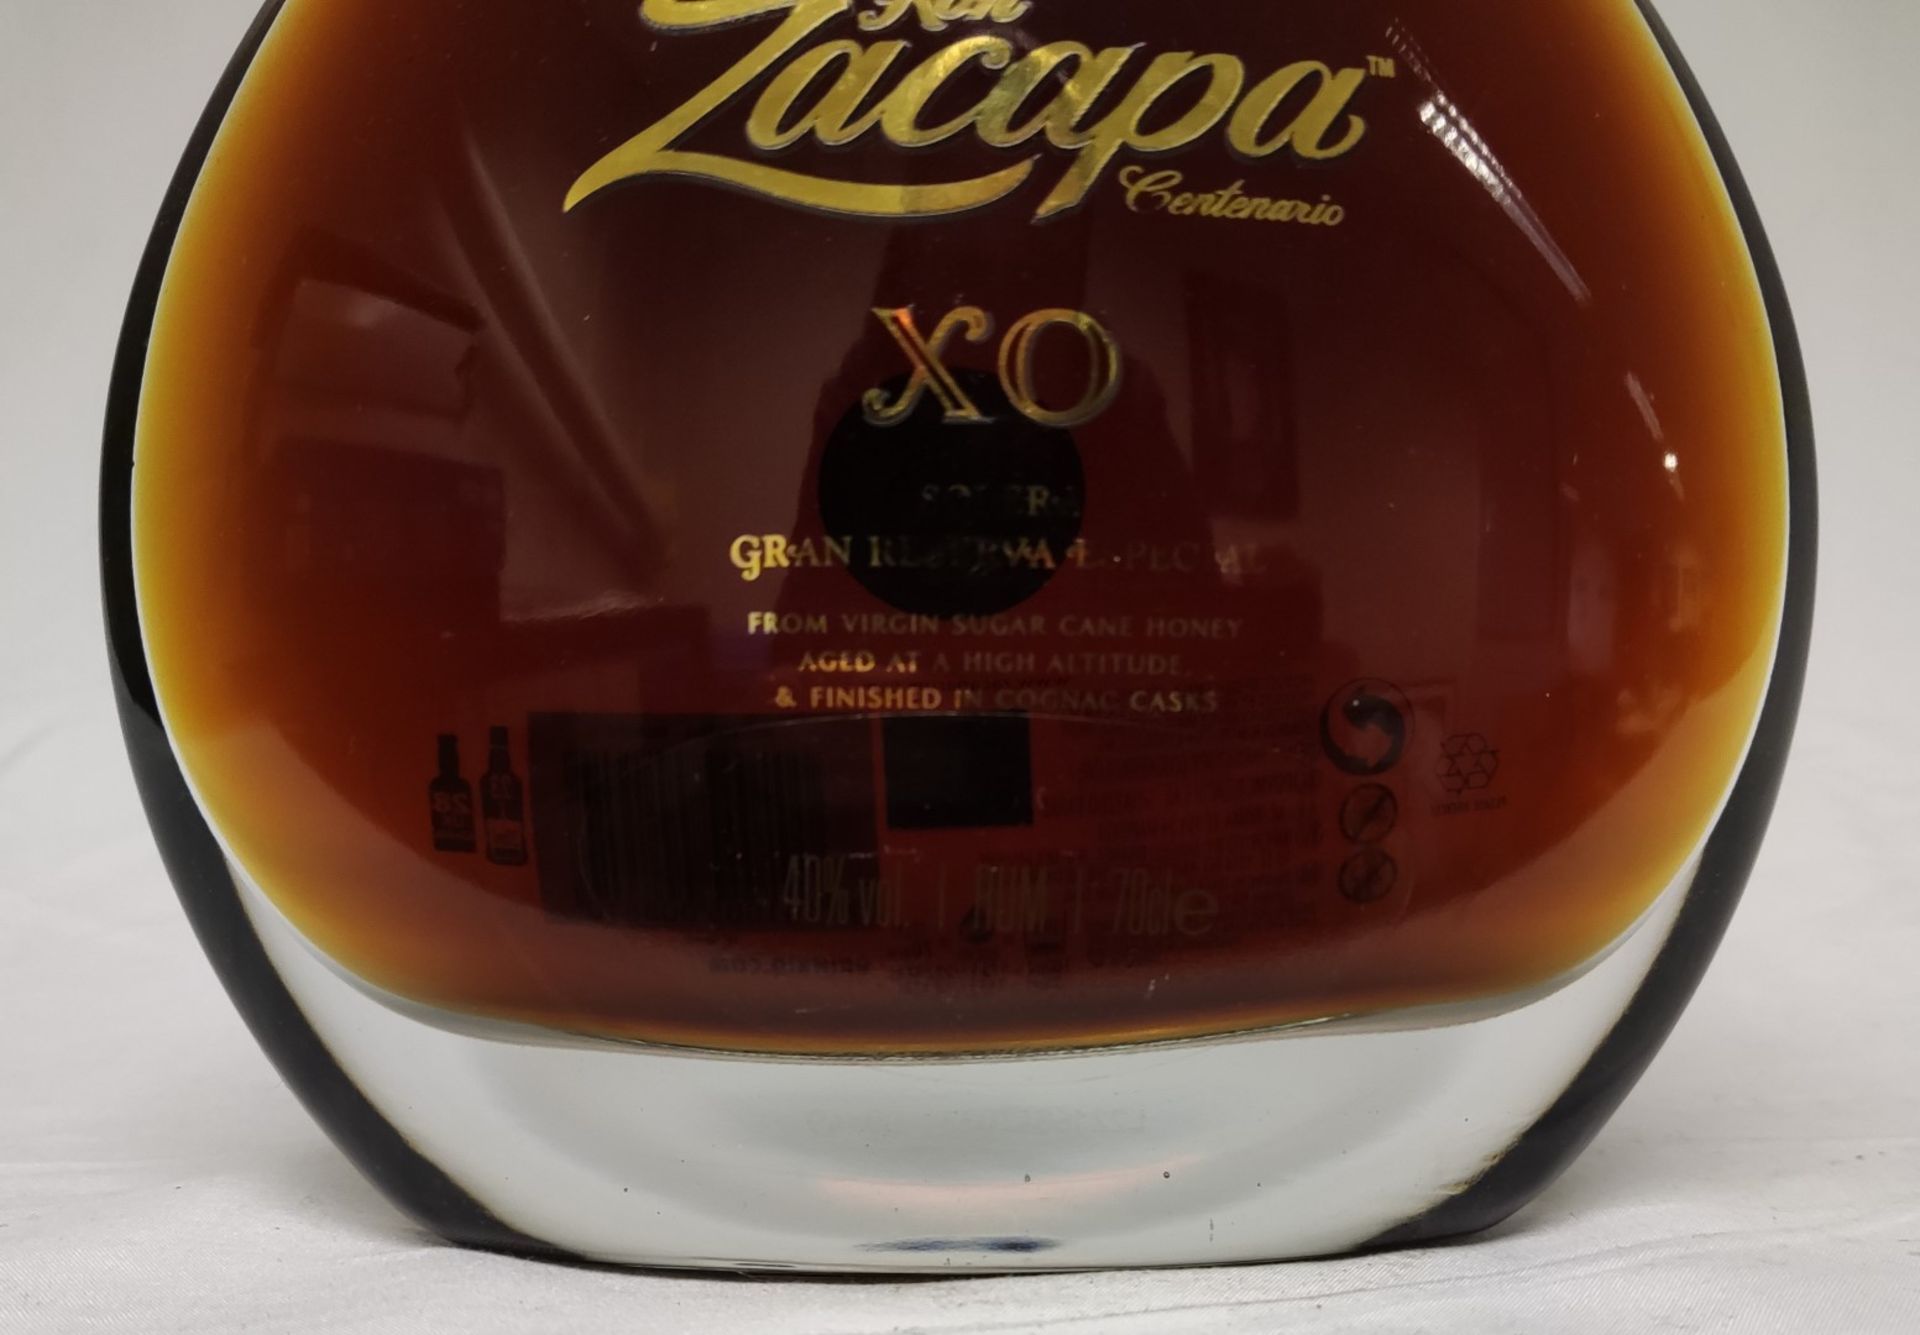 1 x Bottle of Ron Zacapa Centenario Xo Rum - 70cl - RRP £130 - Image 2 of 4